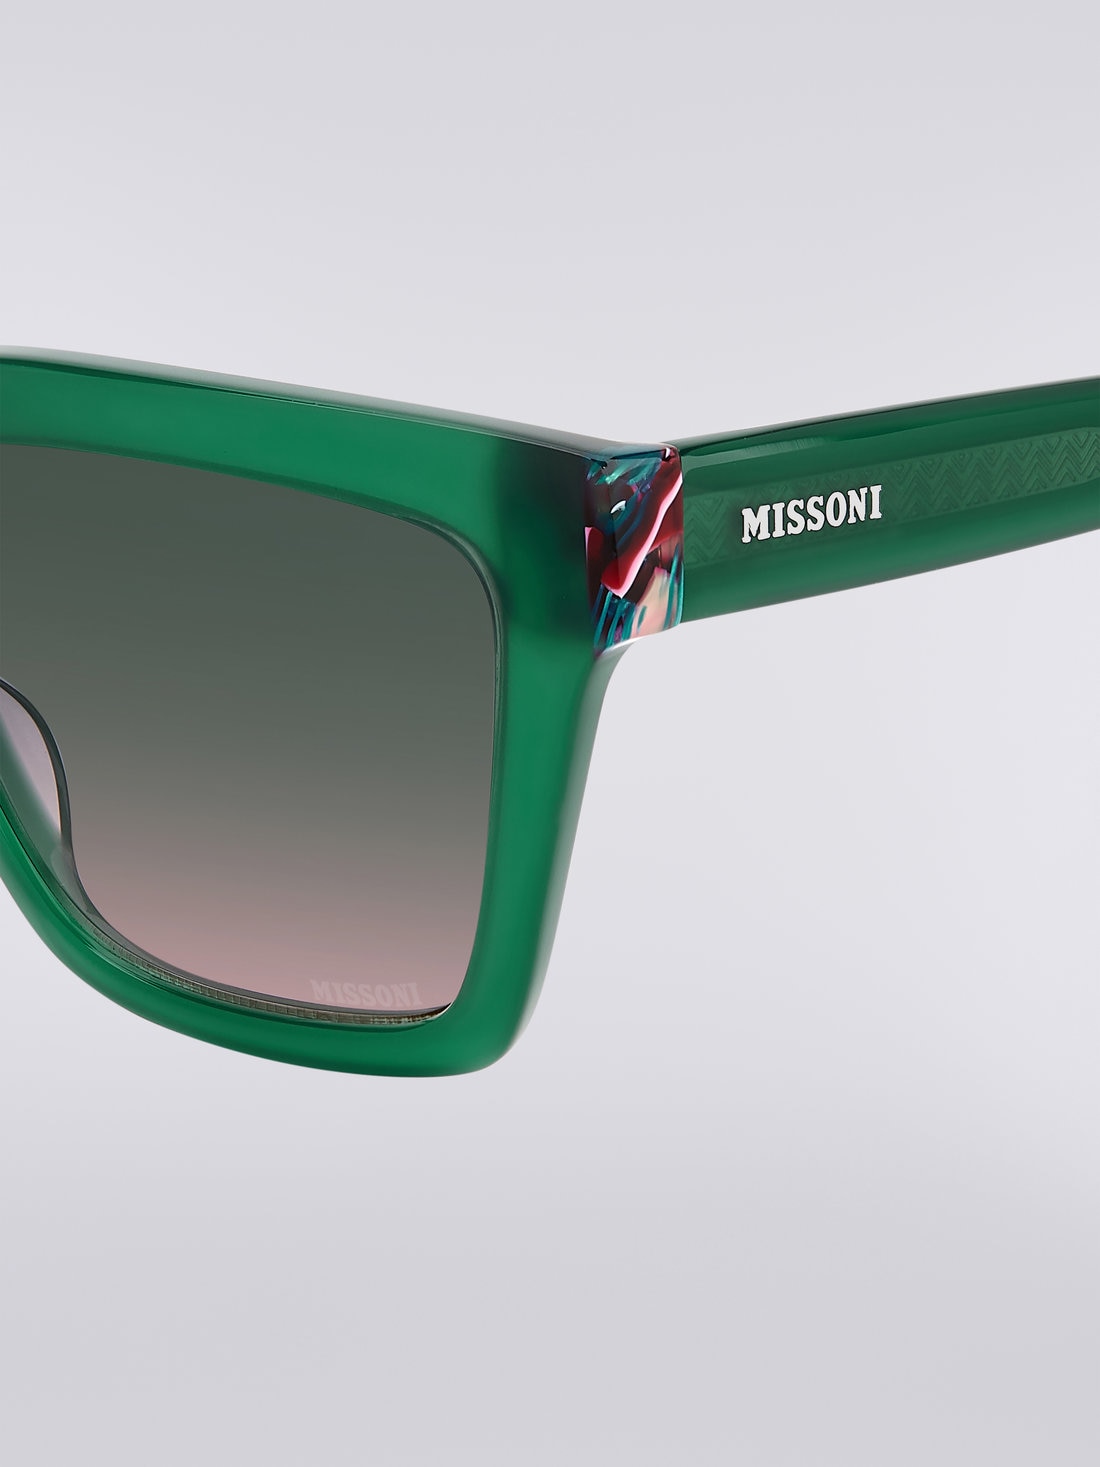 Missoni Seasonal Acetate Sunglasses, Green & Pink - 8051575840203 - 3